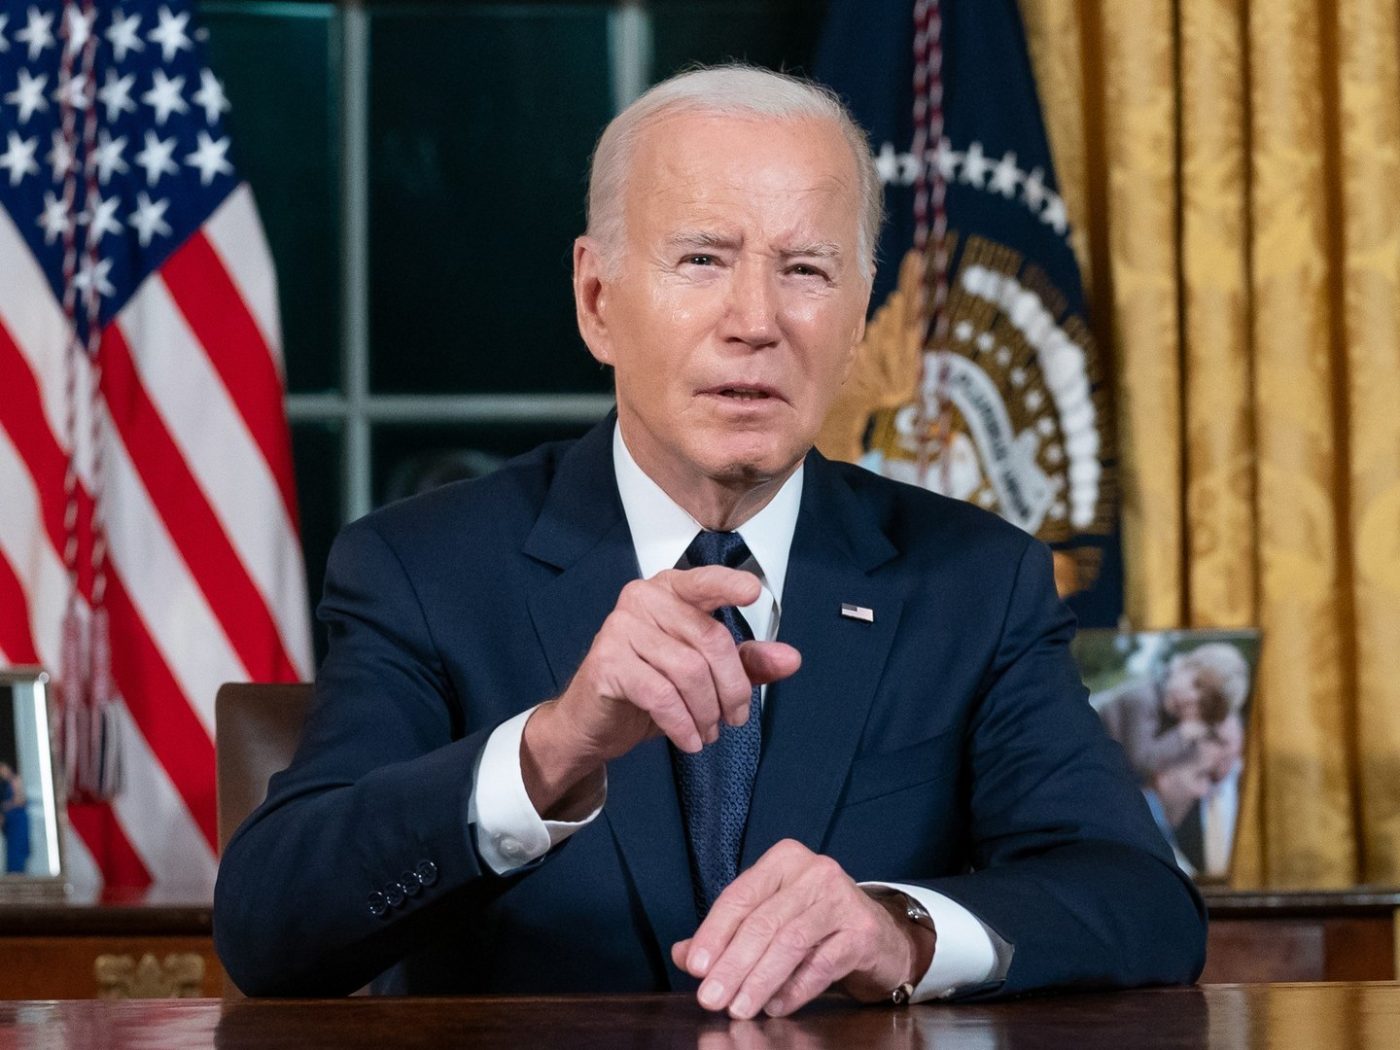 Photo: President Biden's Oval Office speech on October 19 making the case for wartime aid to Israel and Ukraine. Credit: @POTUS via Instagram https://www.instagram.com/p/CymrWRiuJNf/